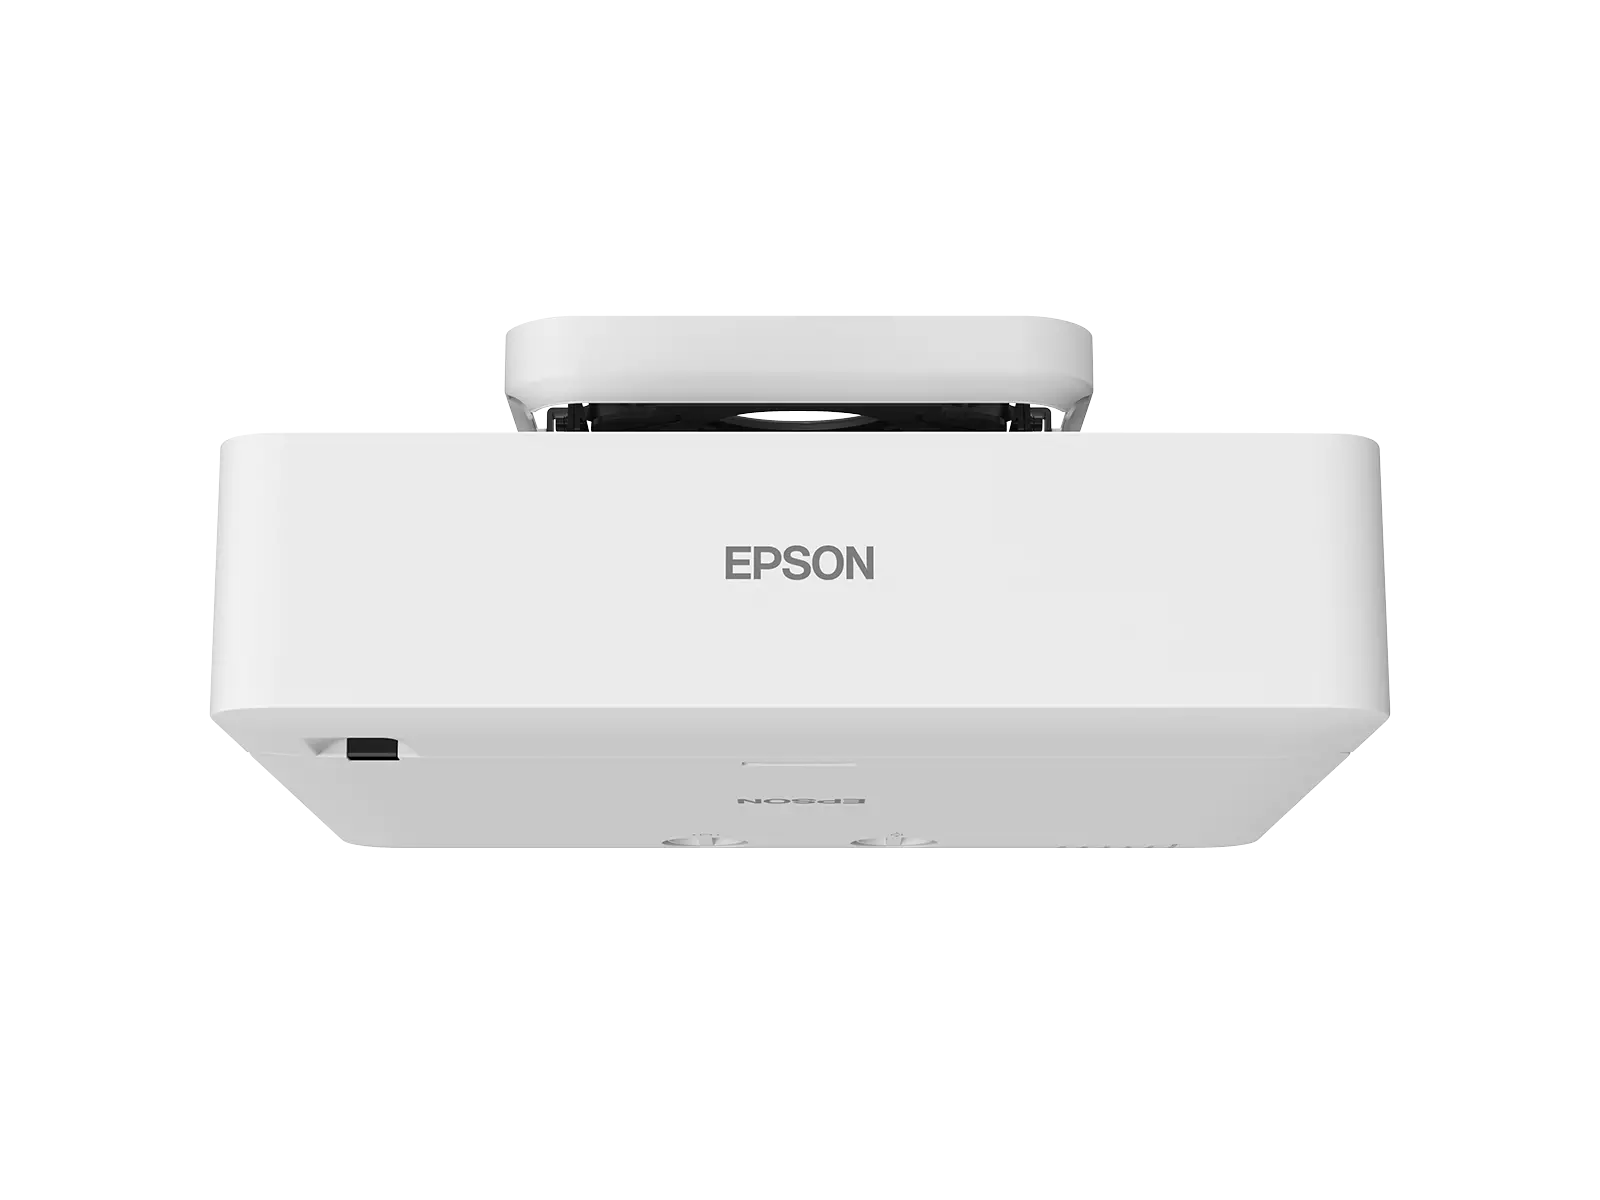 Epson Laserprojektor EB-L630U ppm-stuttgart 008